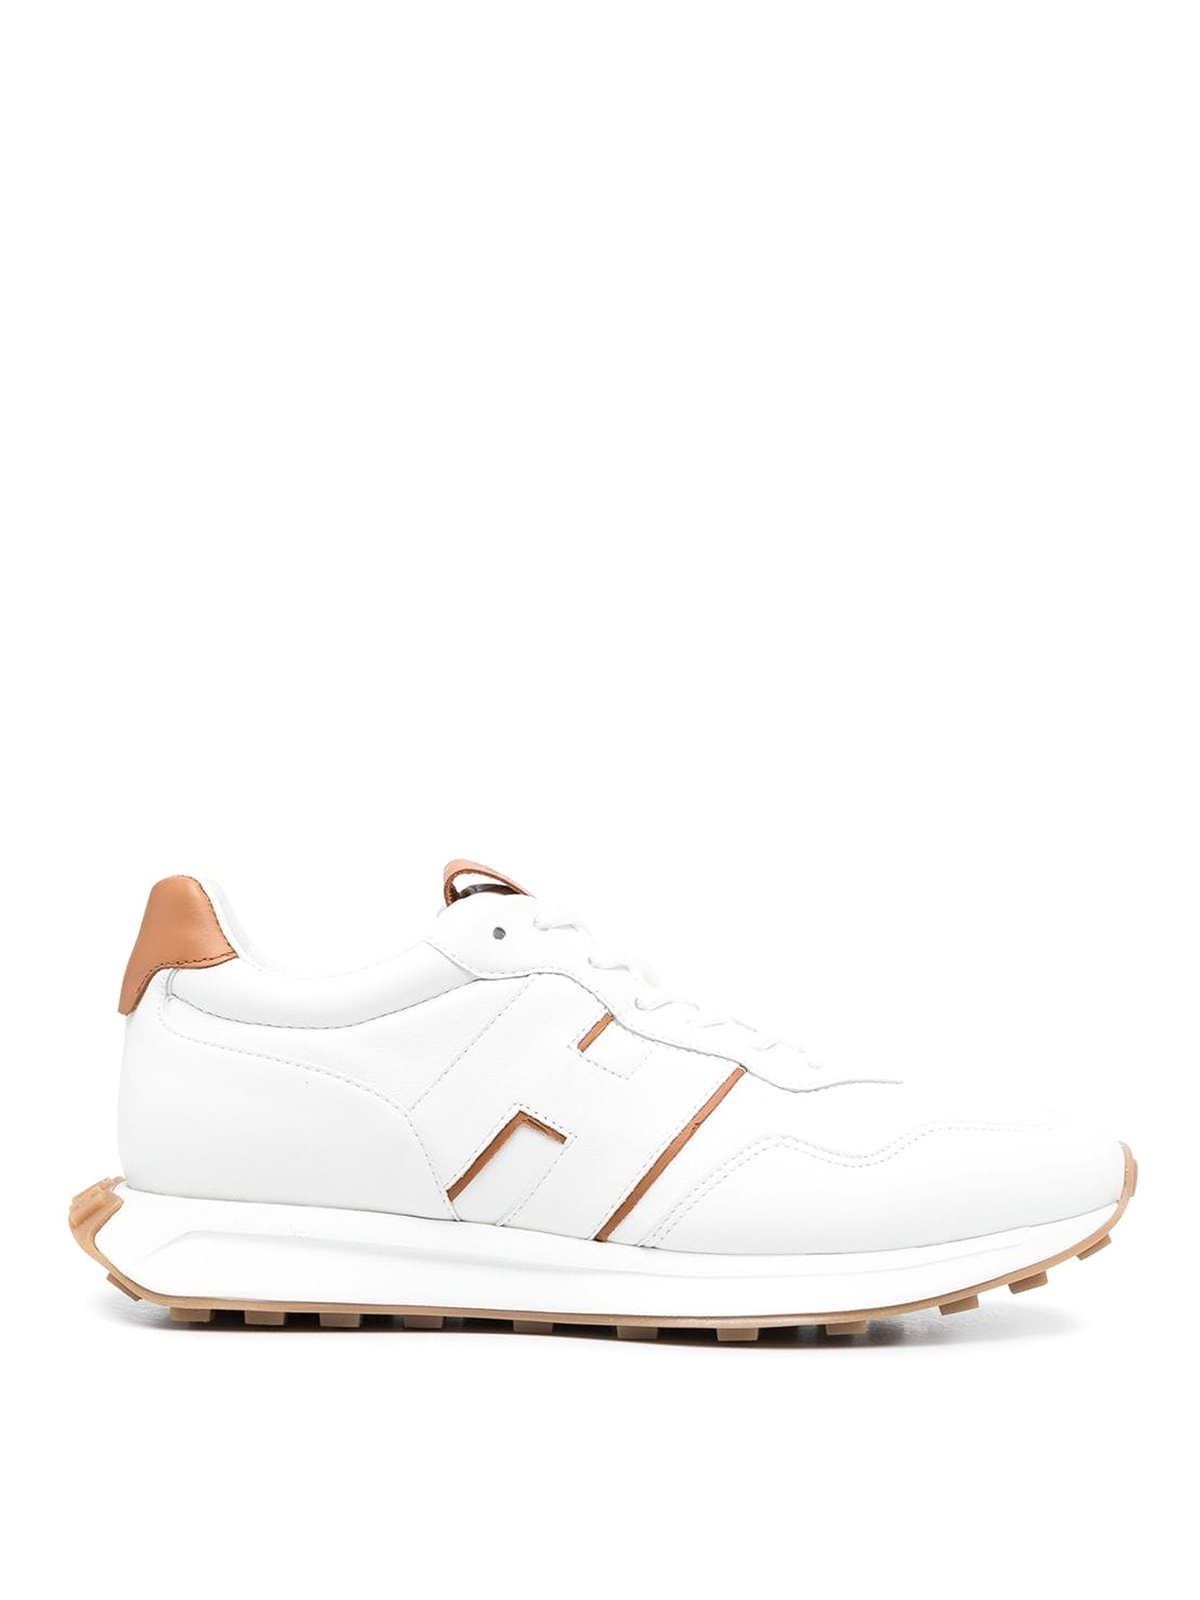 Hogan Sneakers Leather In Blanco